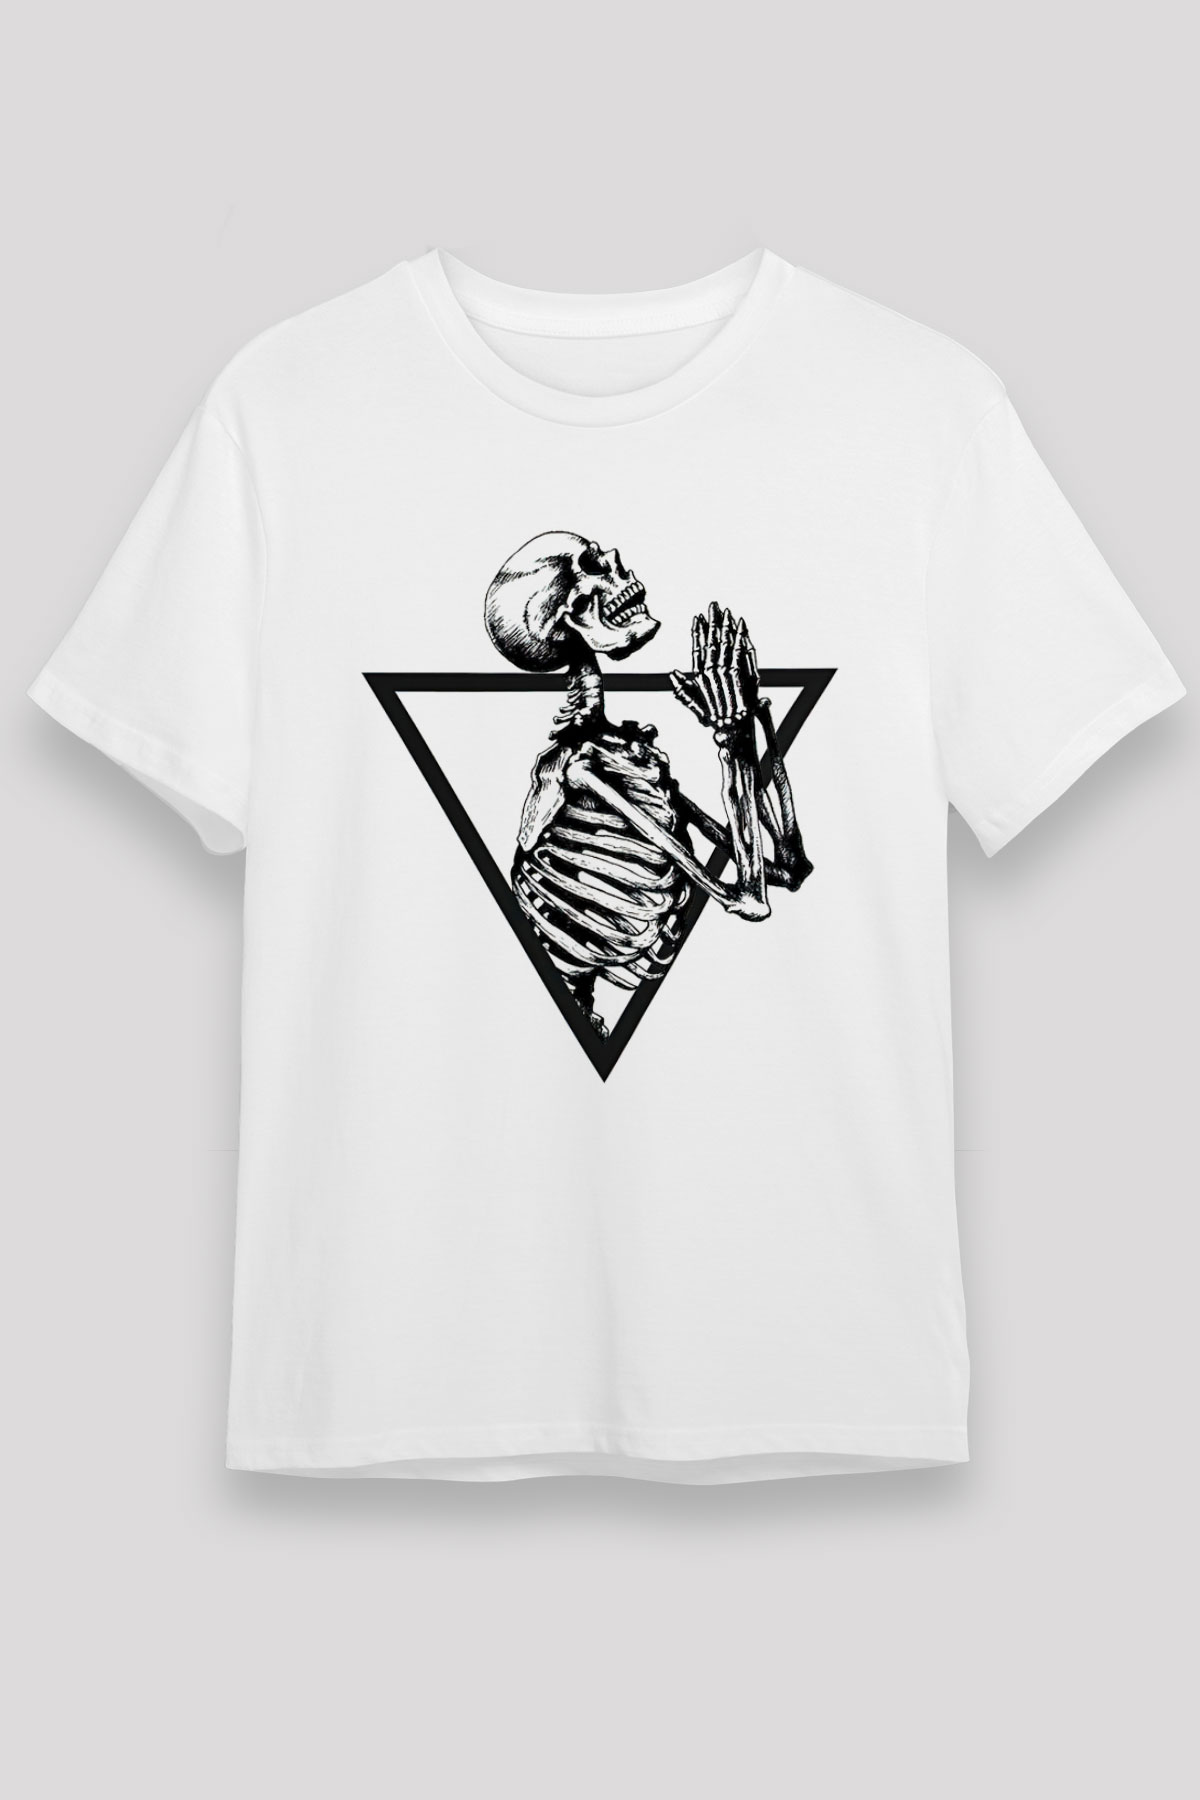 Suicideboys T shirt,Hip Hop,Rap Tshirt 04